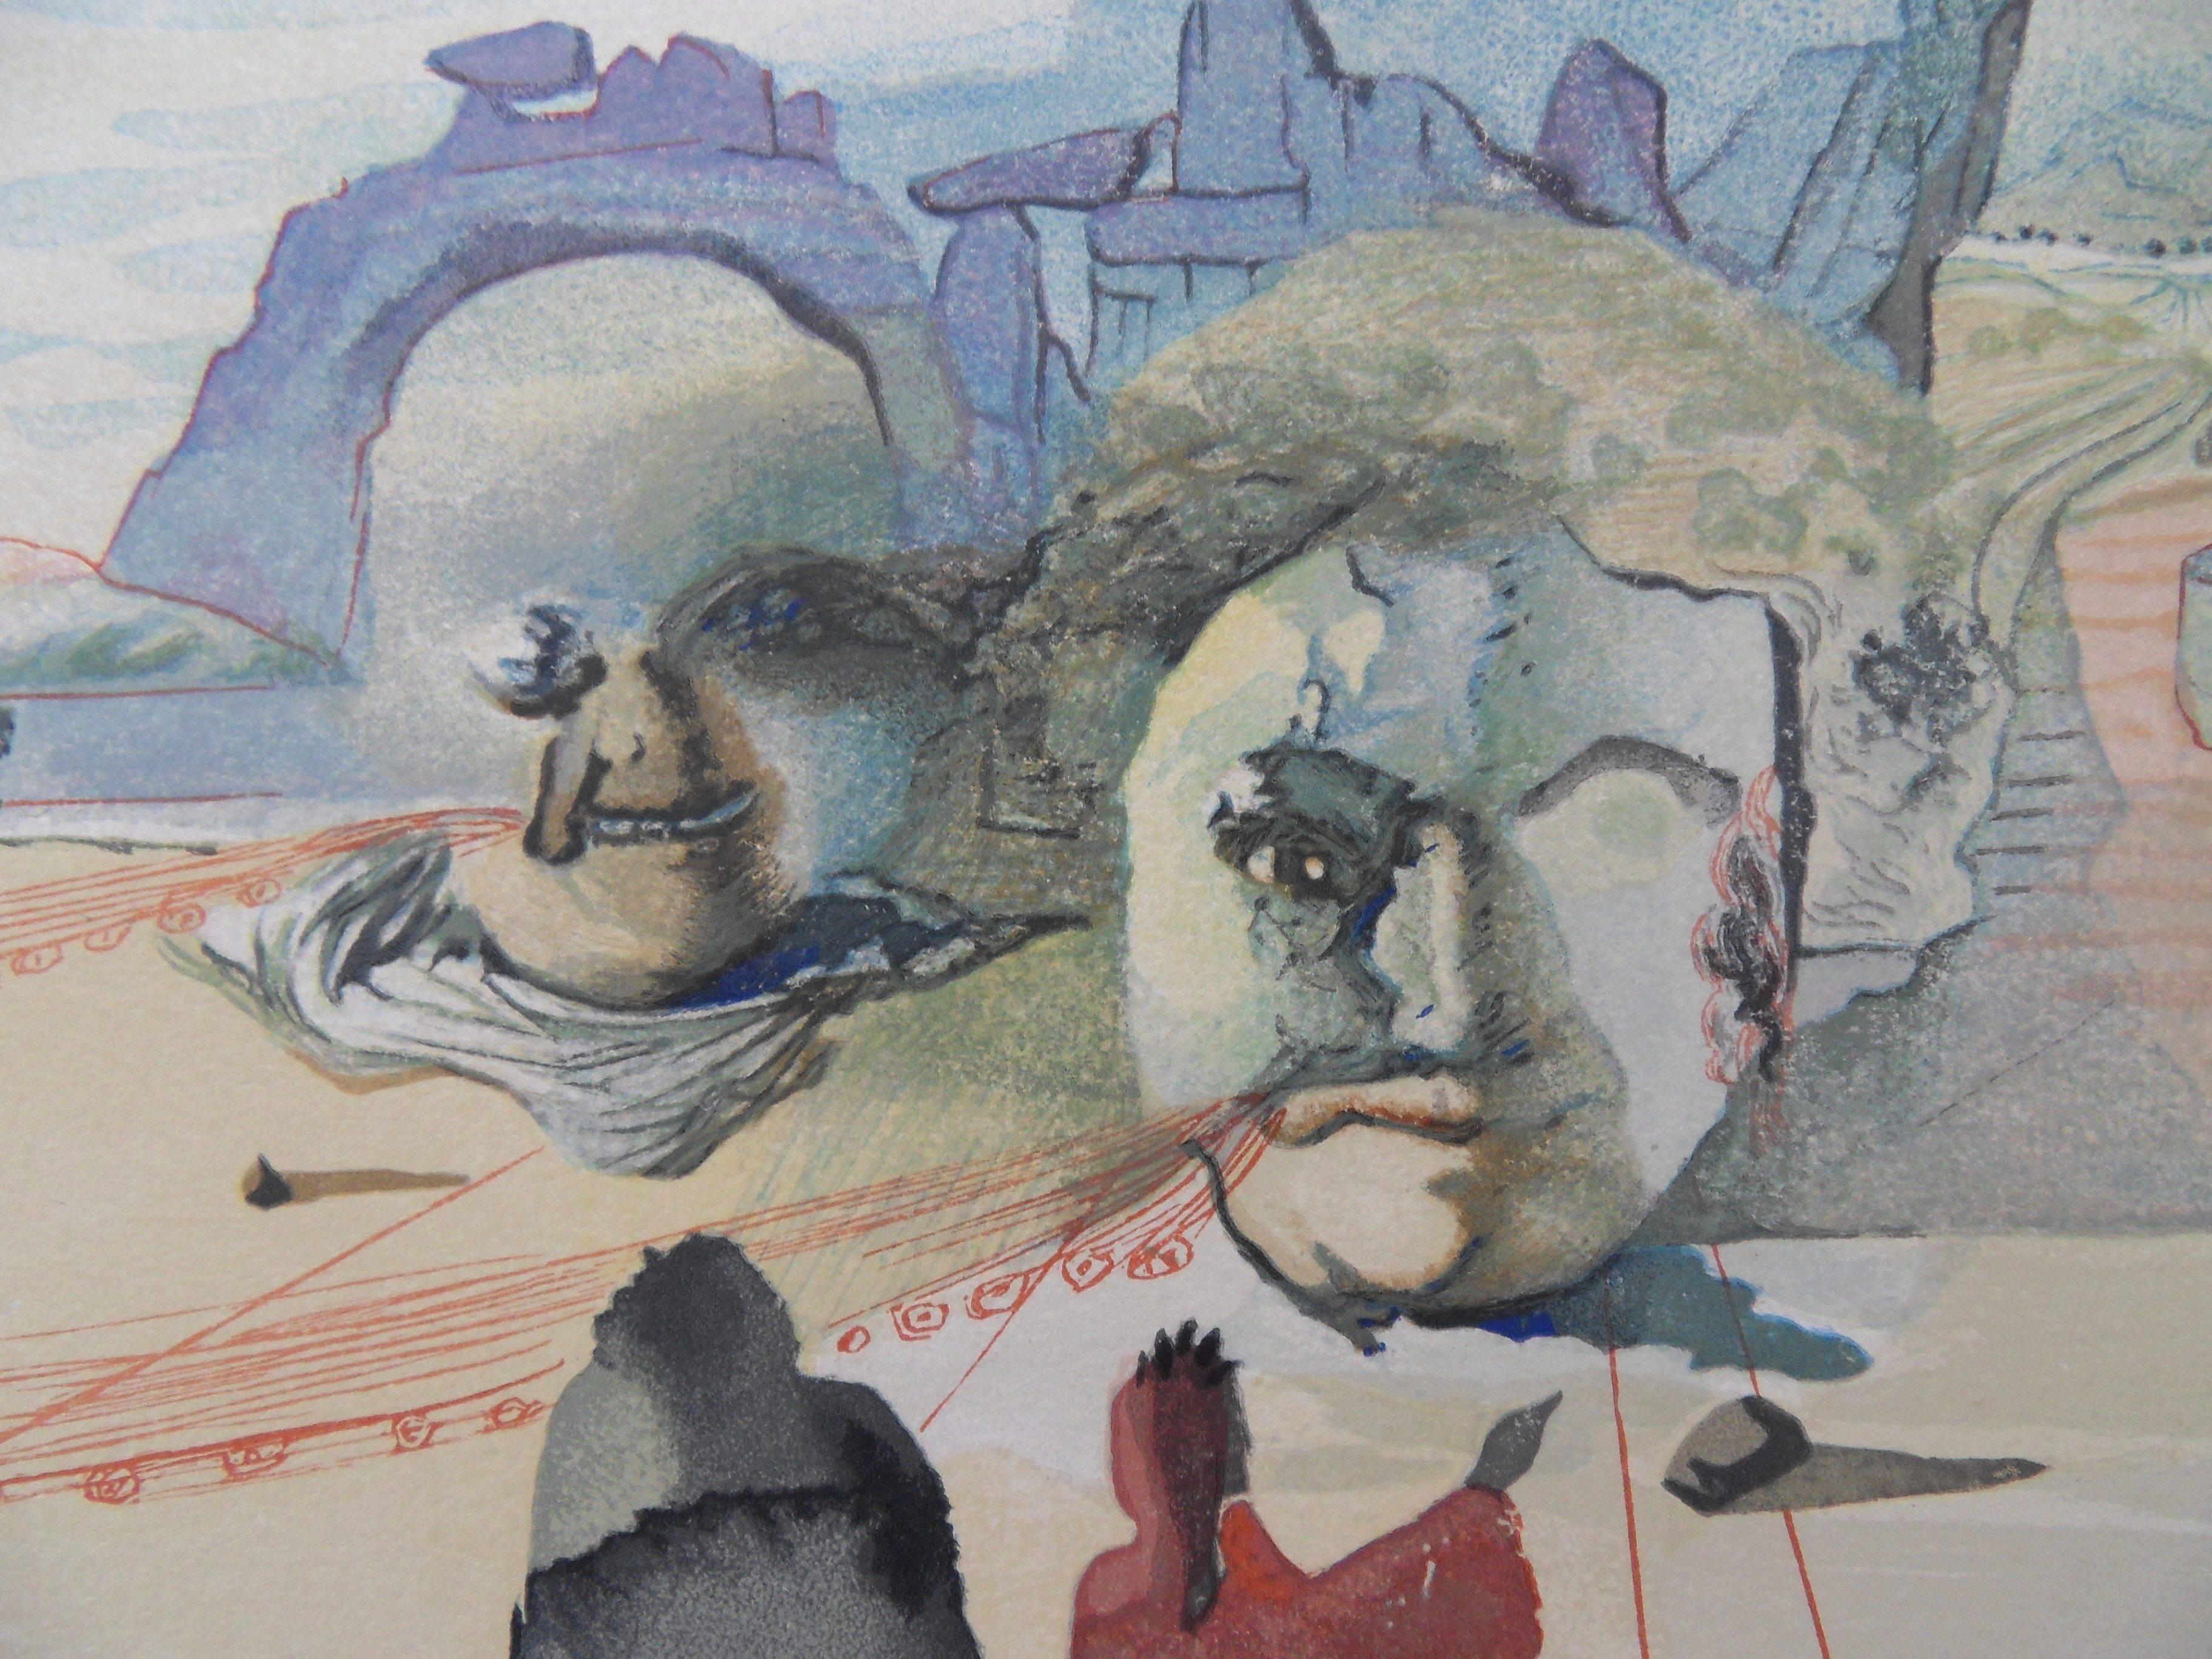 Purgatory 20 - Avarice et extravagance - woodcut - 1963 - Print by Salvador Dalí